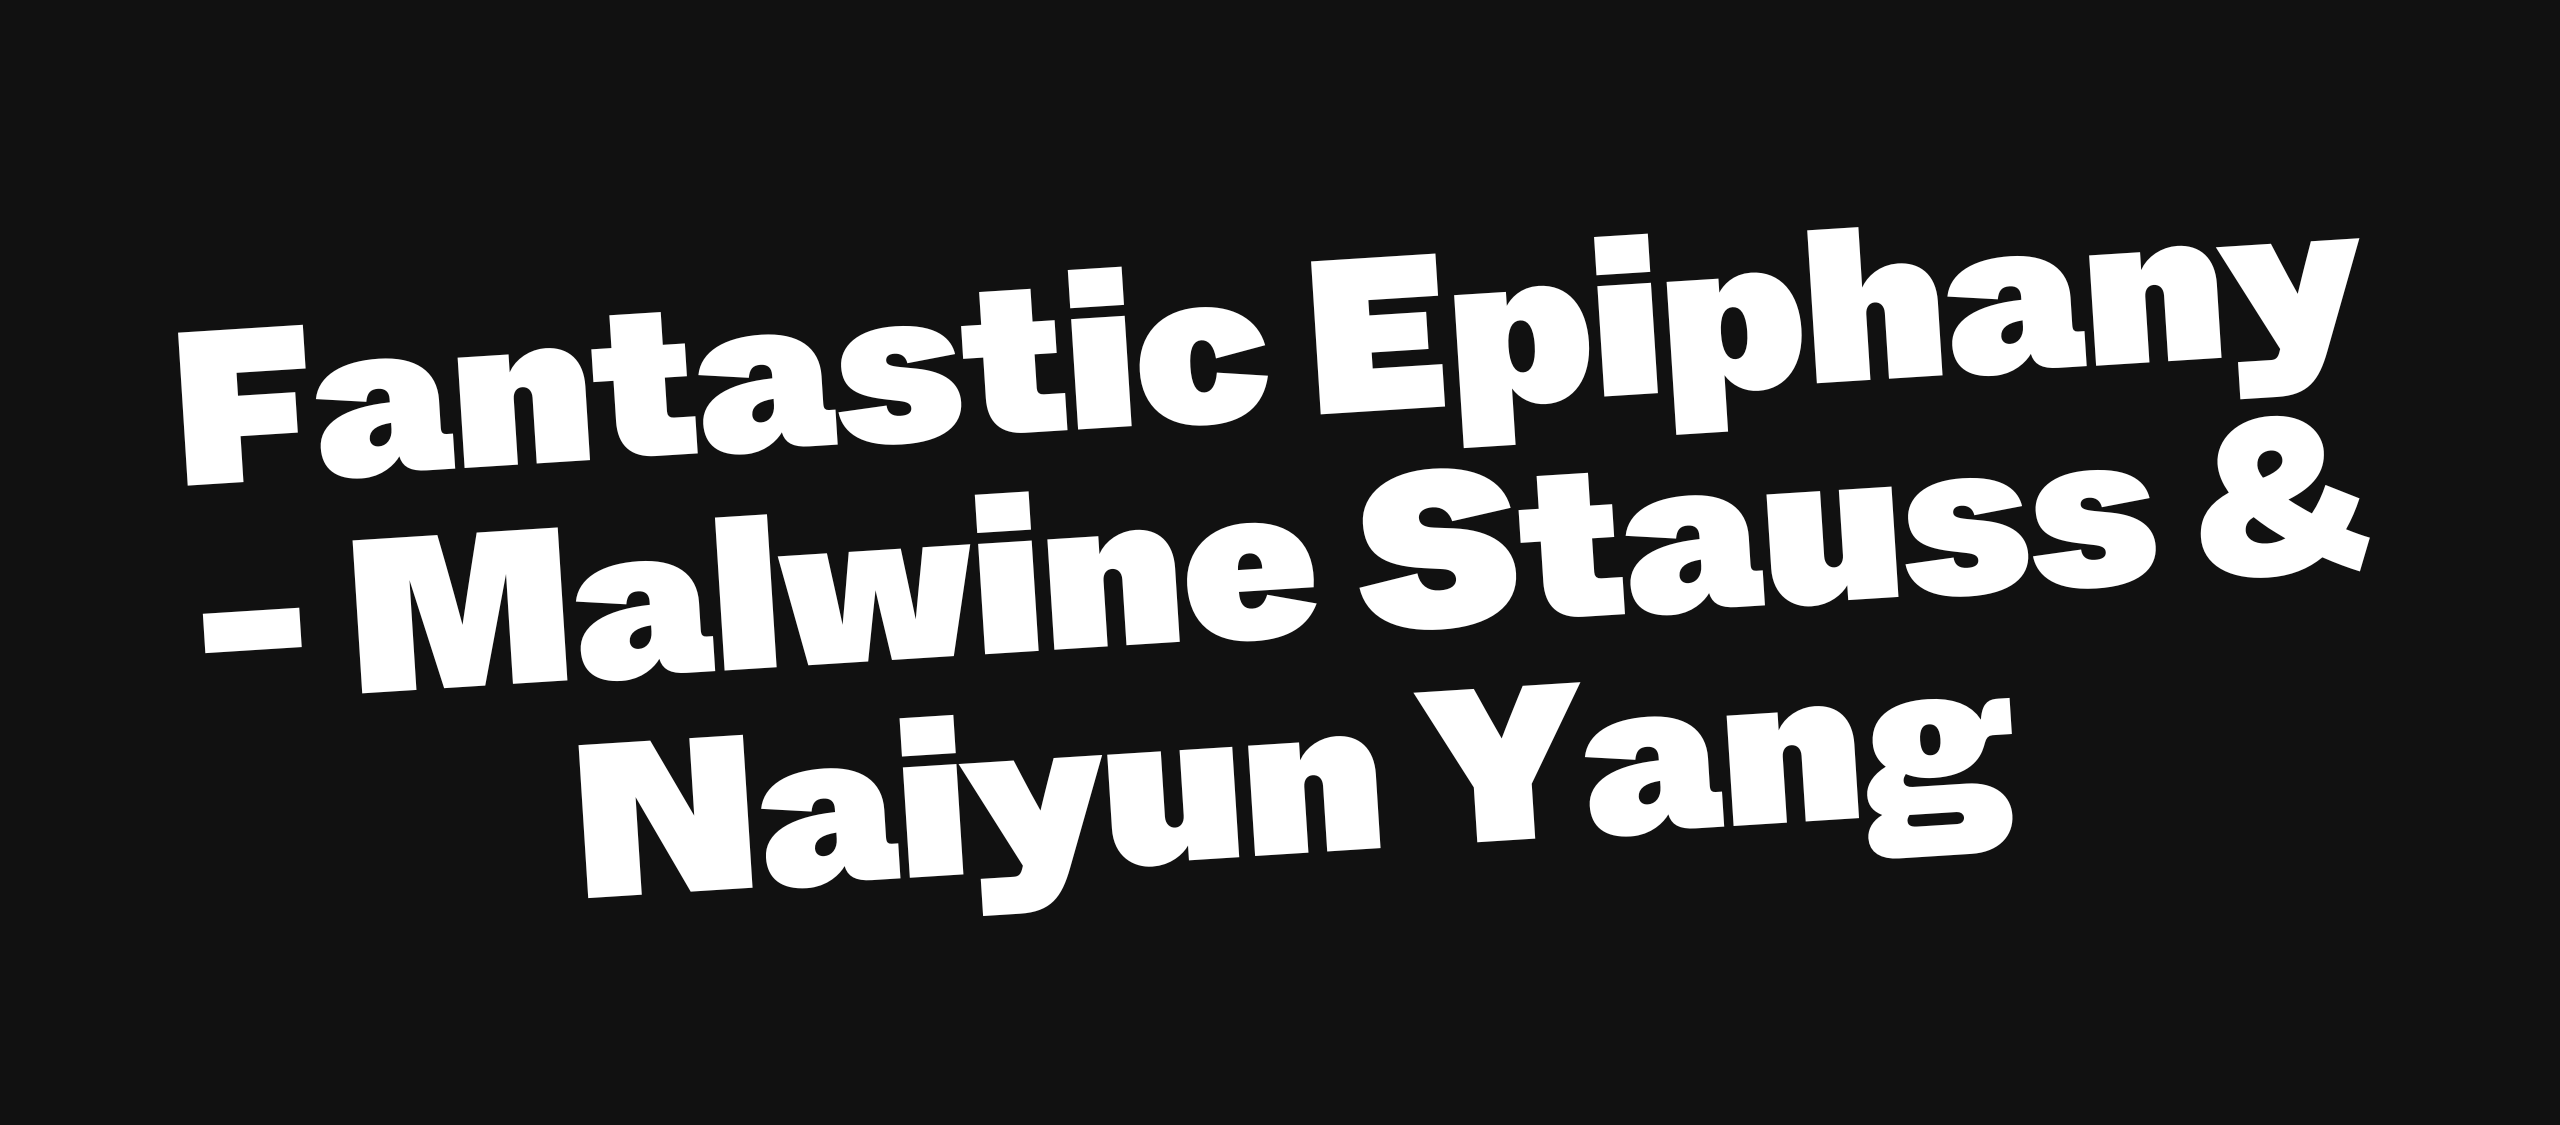 Fantastic Epiphany - Malwine Stauss & Naiyun Yang